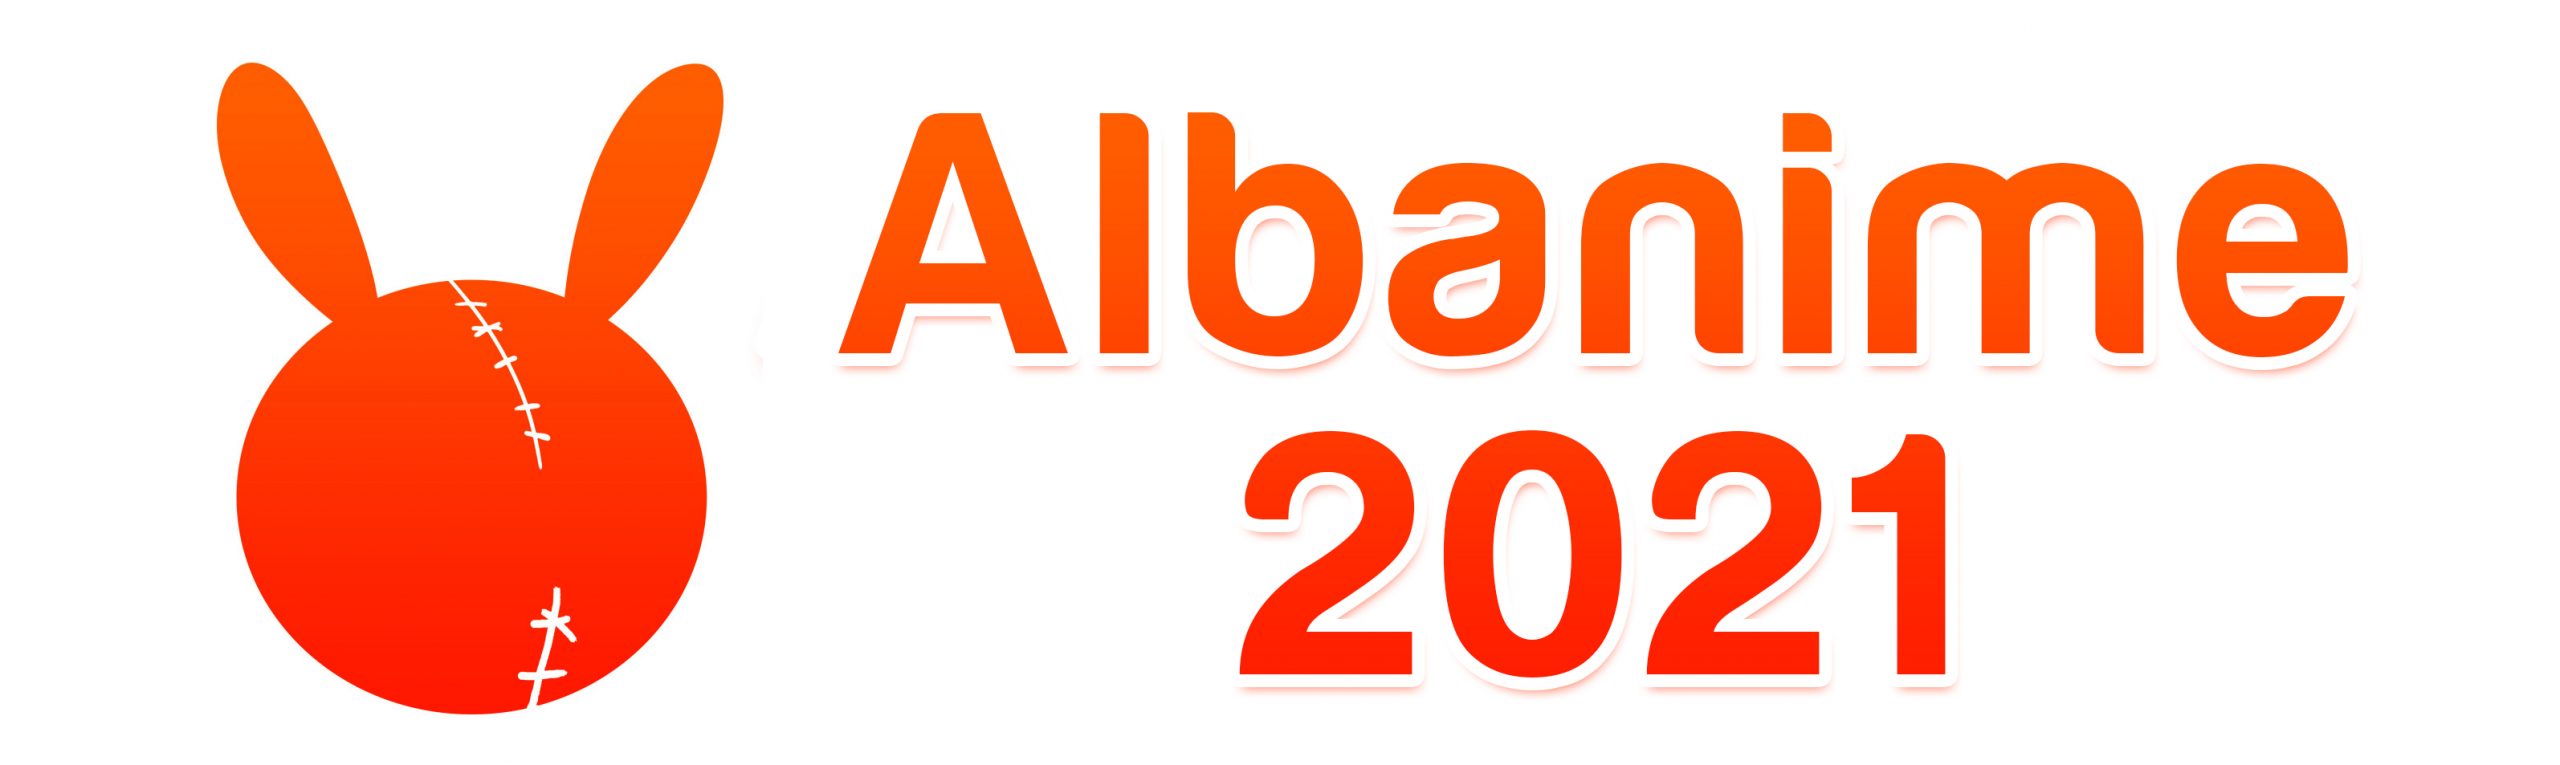 ALBANIME2021